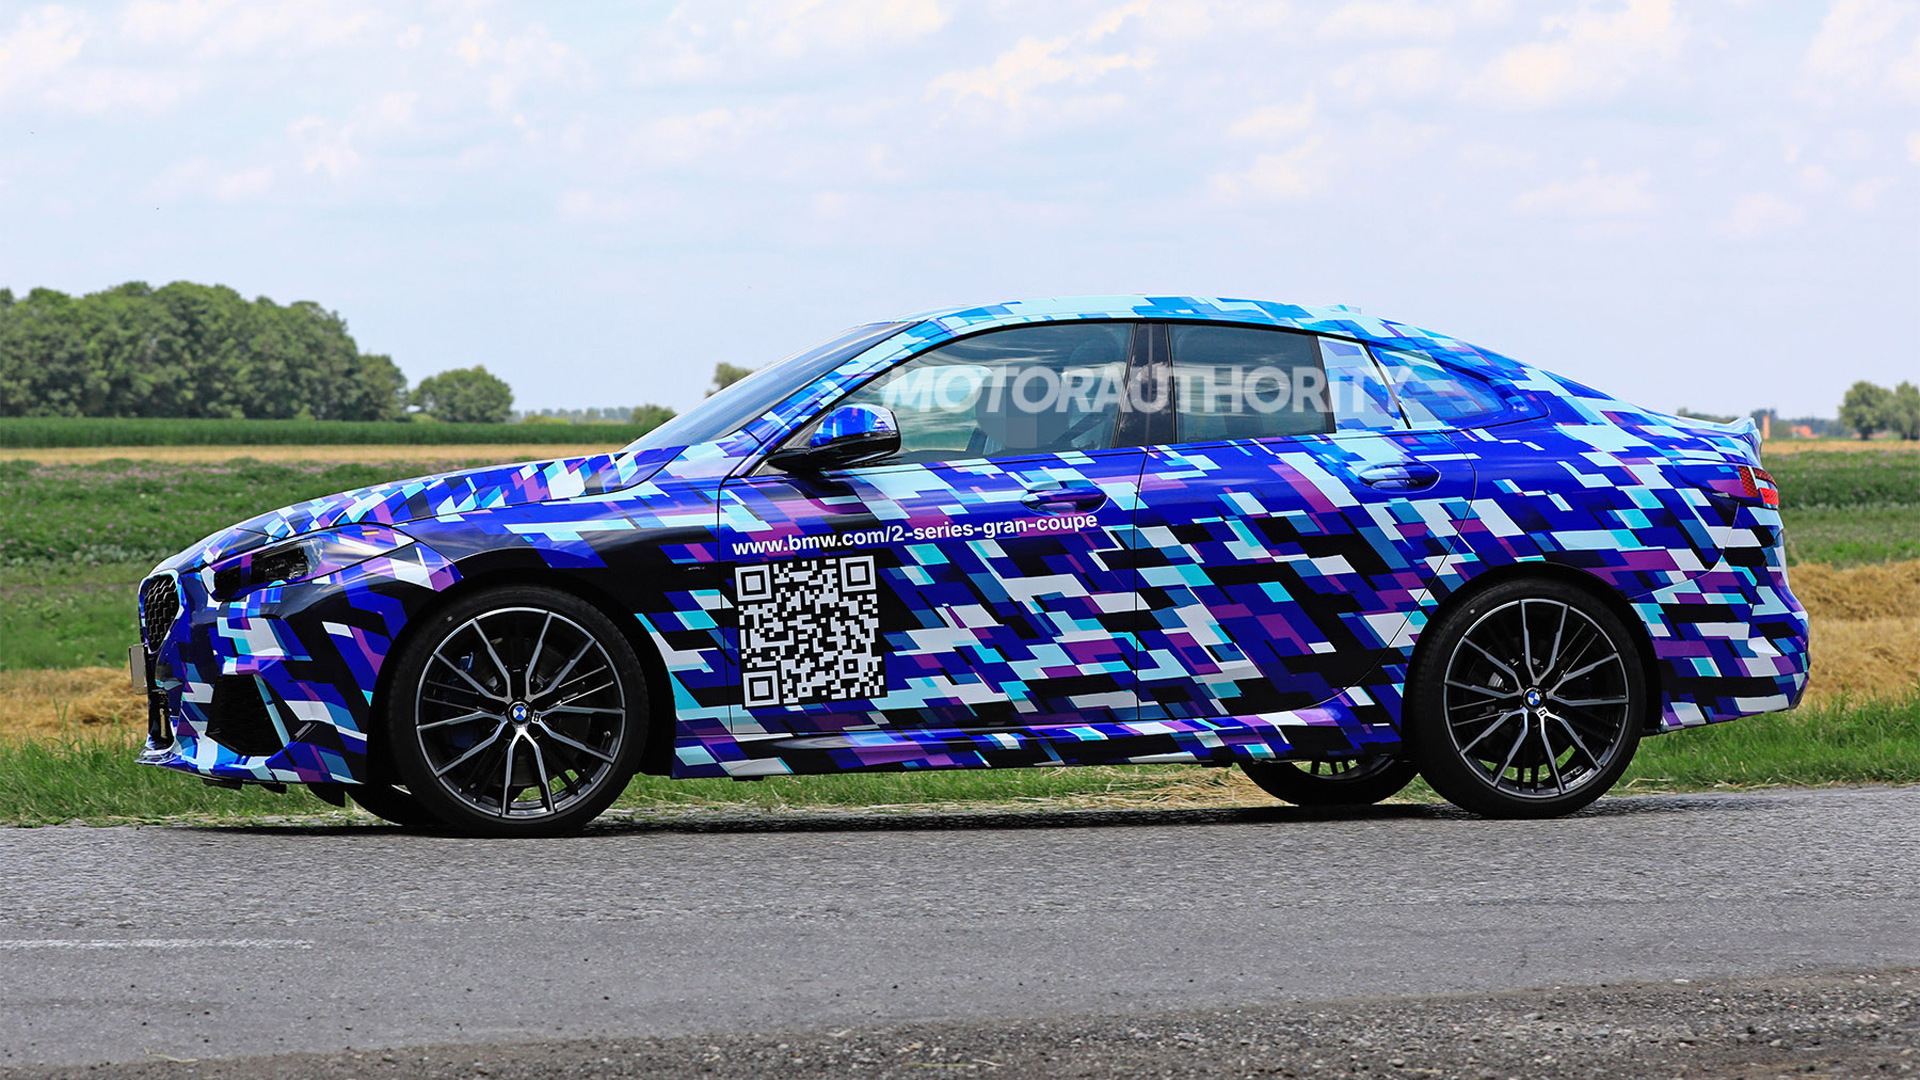 2021 BMW 2-Series Gran Coupe spy shots - Image via S. Baldauf/SB-Medien